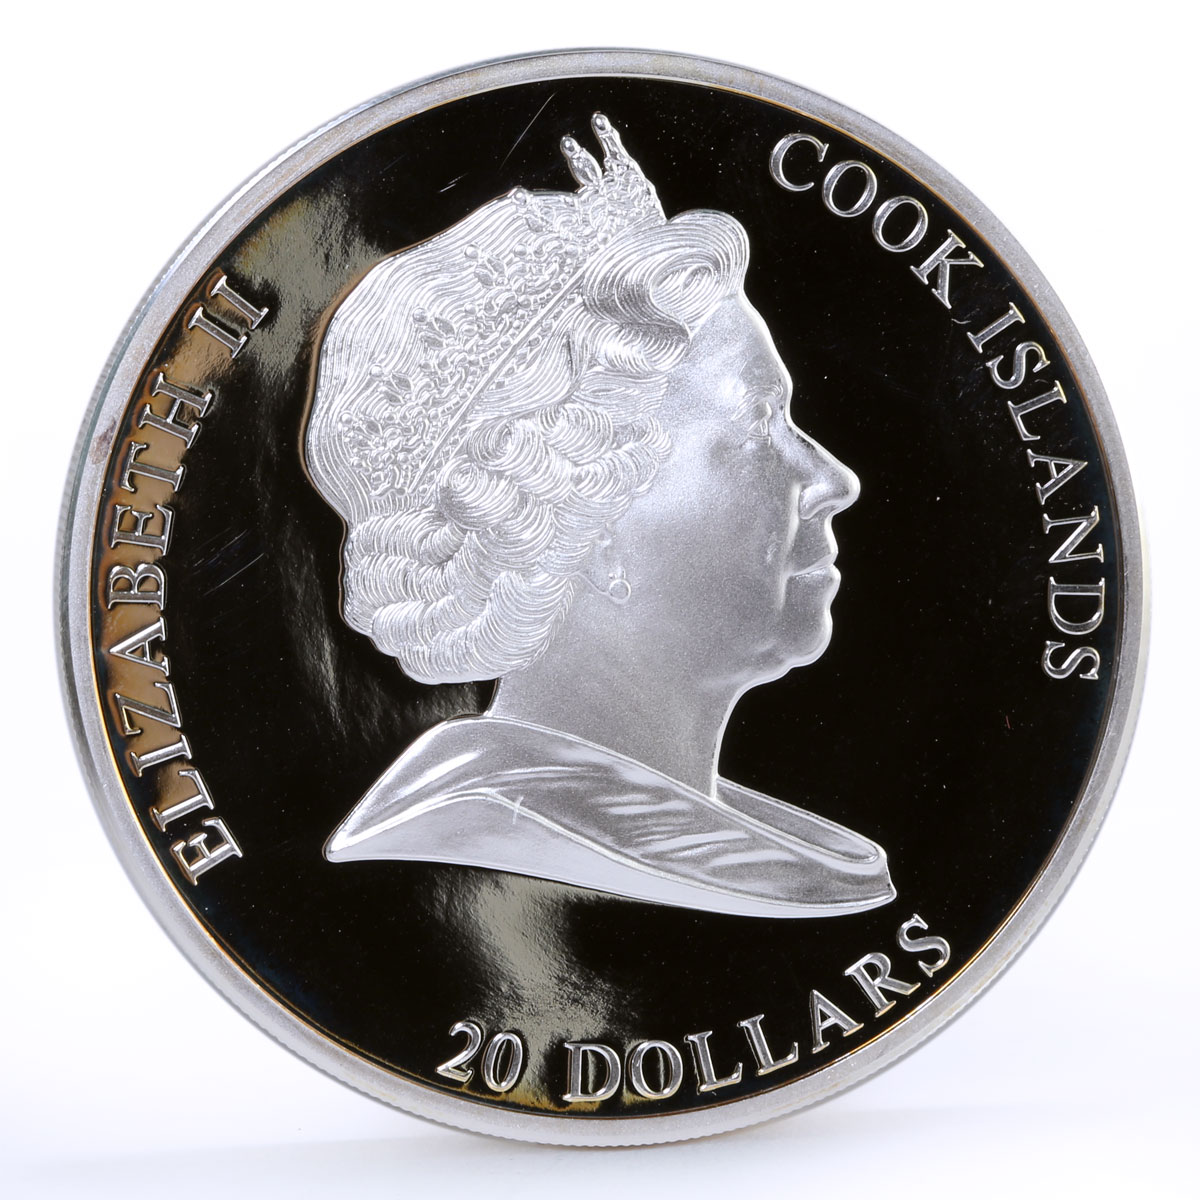 Cook Islands 20 dollars Carl Spitzweg Art Poor Poet colored silver coin 2009